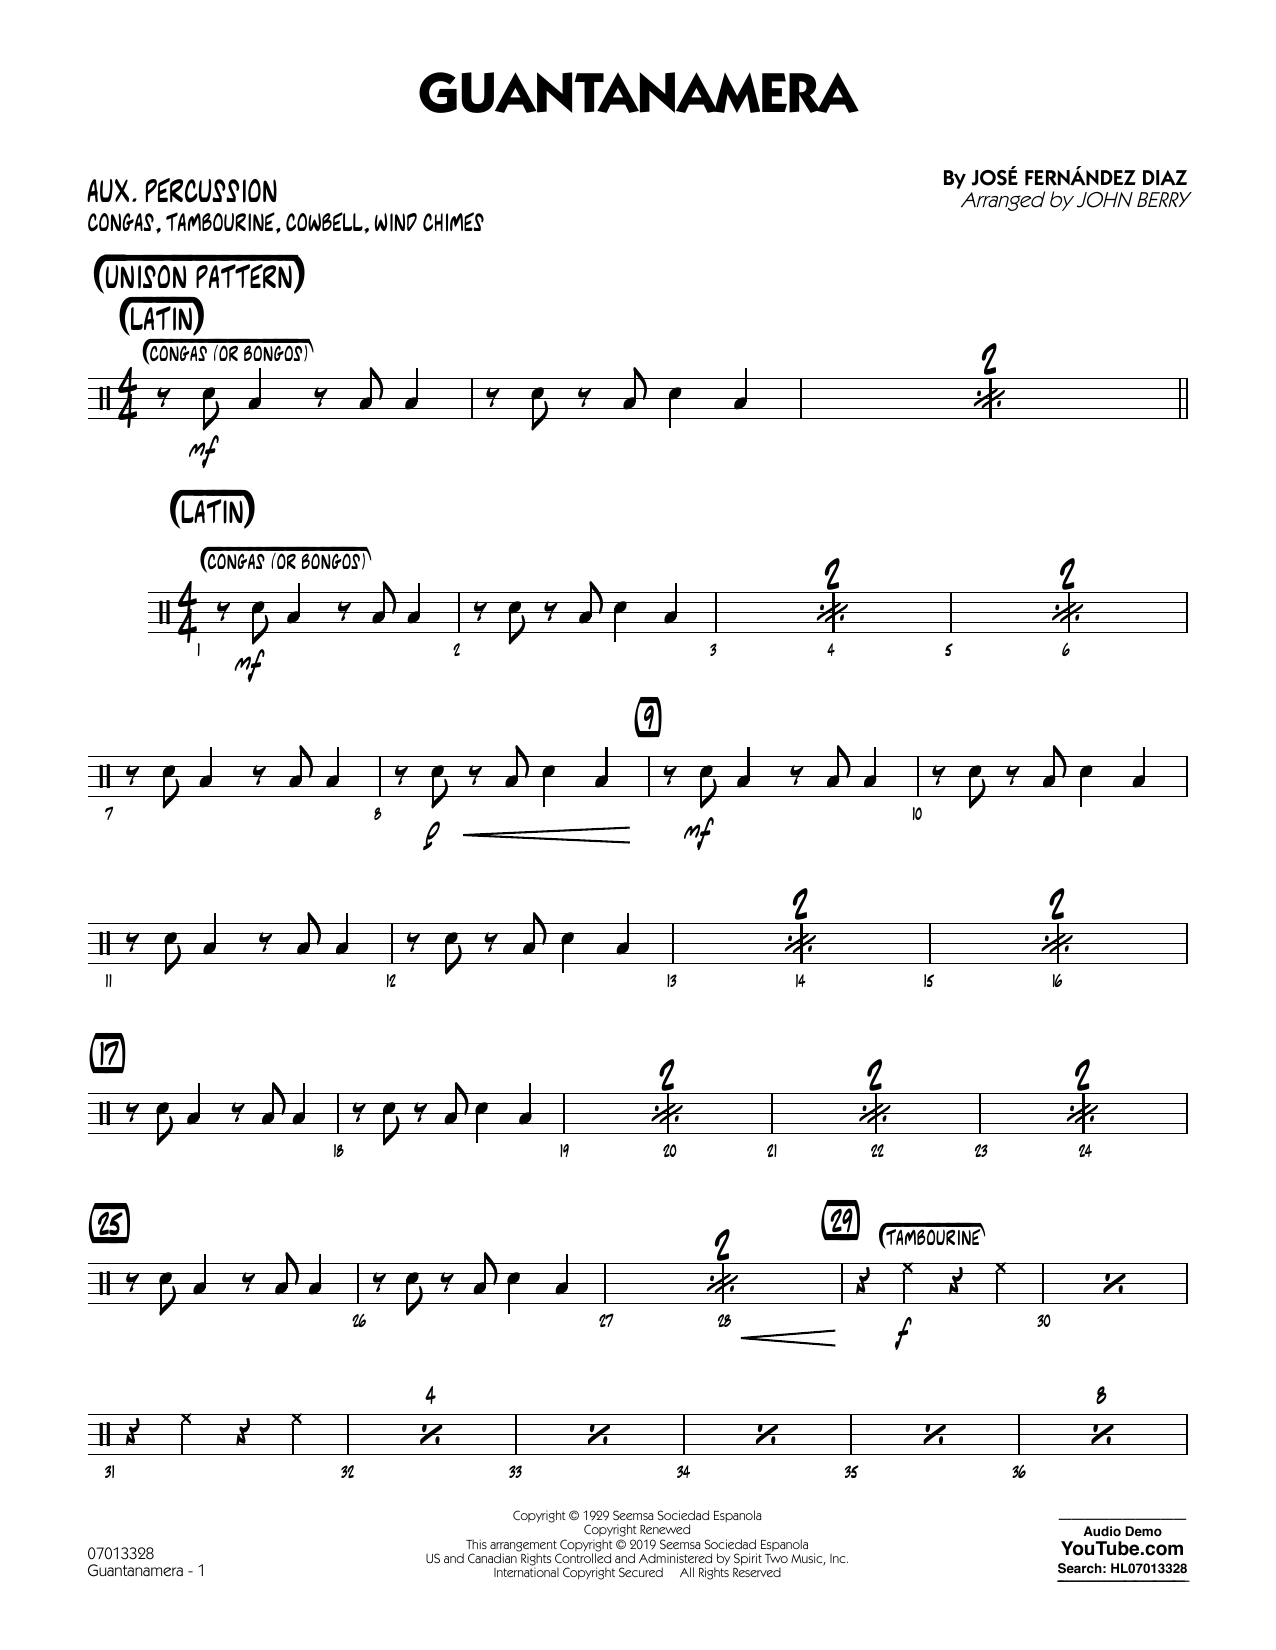 José Fernández Diaz Guantanamera (arr. John Berry) - Aux Percussion Sheet Music Notes & Chords for Jazz Ensemble - Download or Print PDF